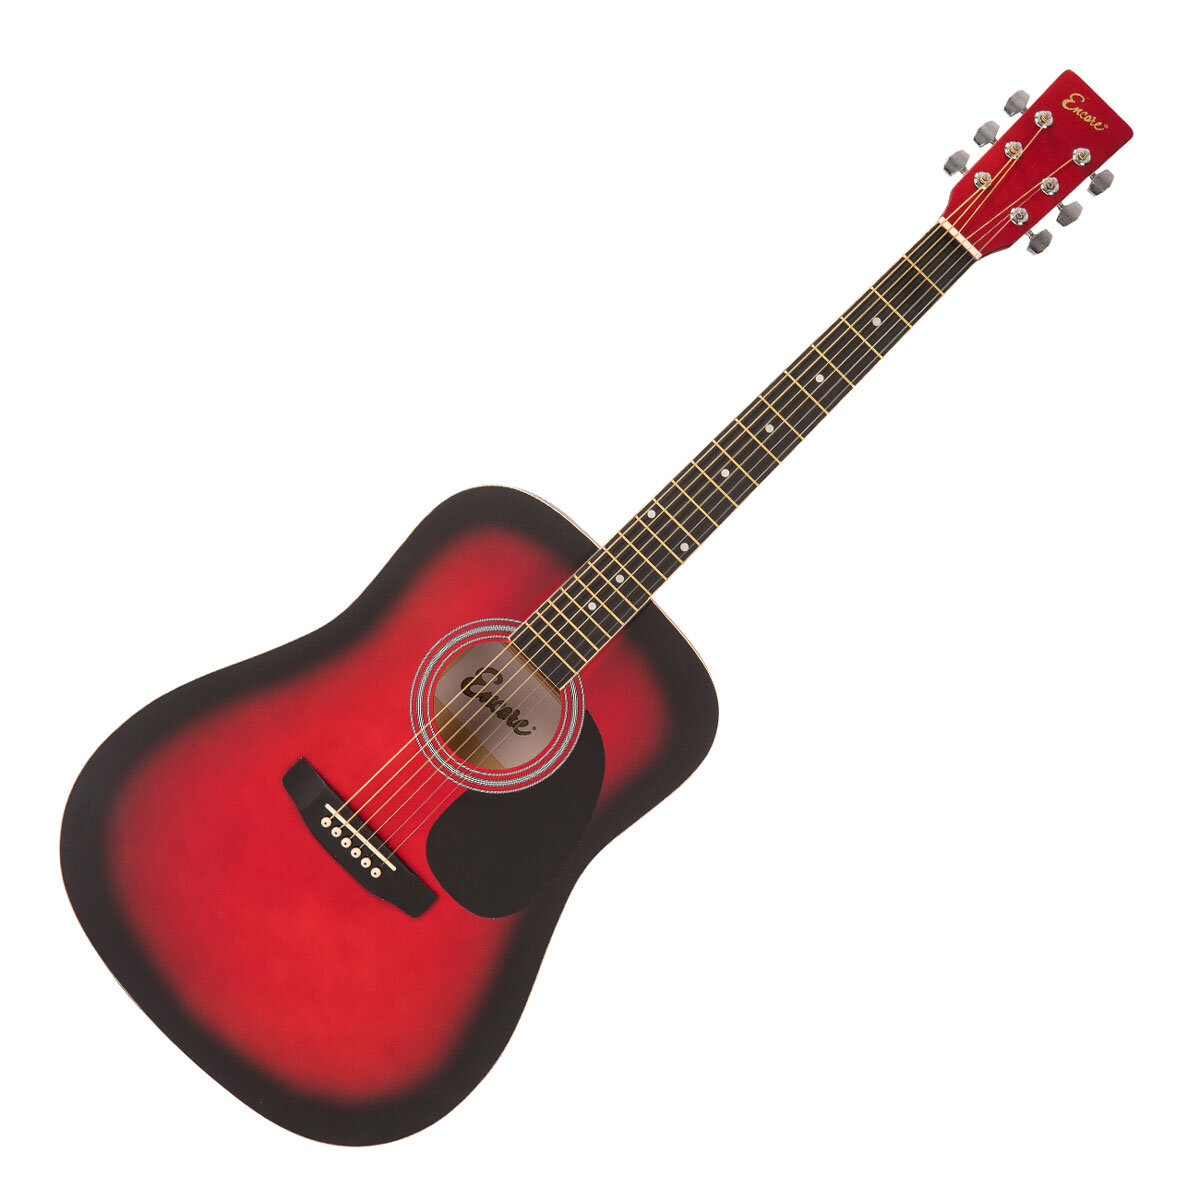 Red sunburst guitar, right handed